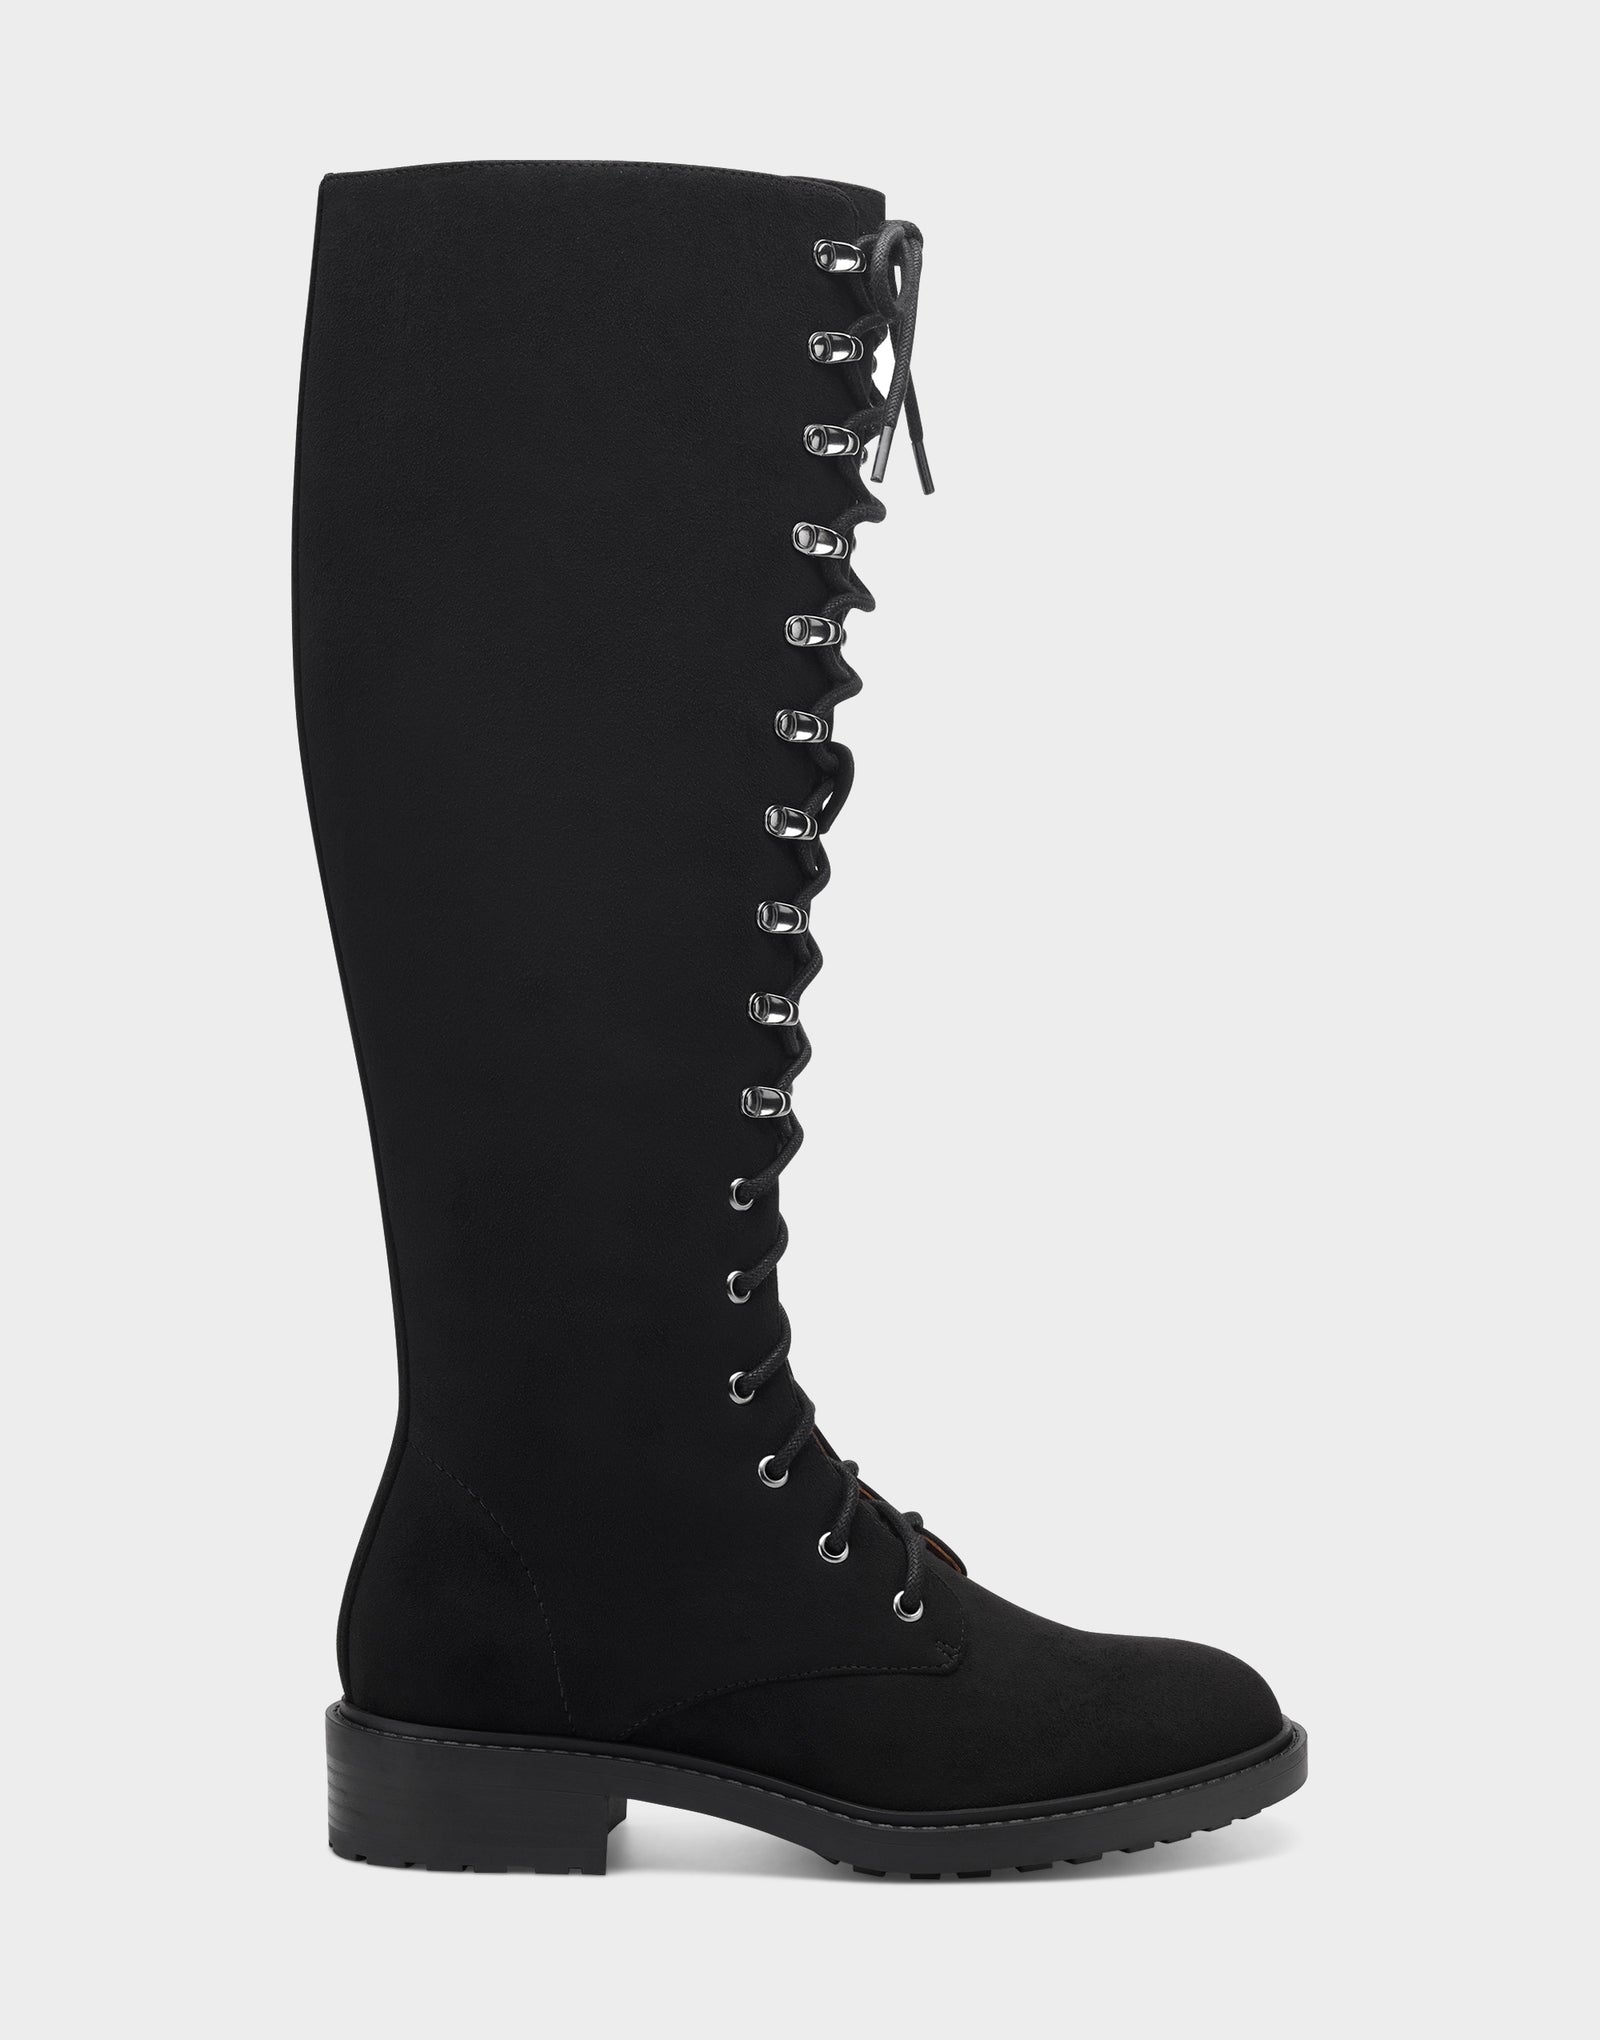 Women's Tall Boot in Black